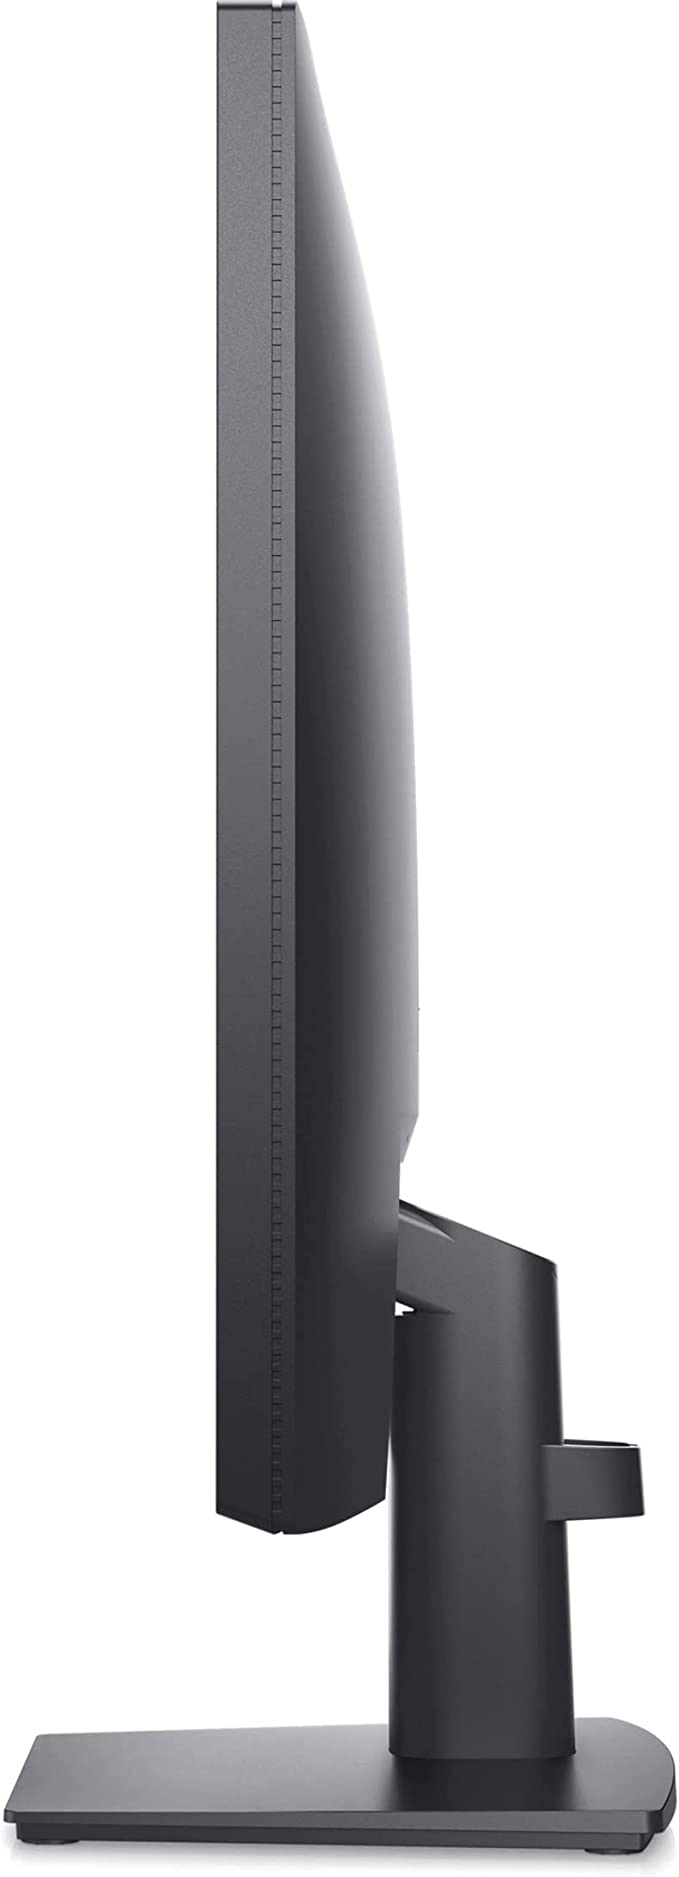 Dell E2422H 23.8" FHD 1080p LED LCD Monitor - Black